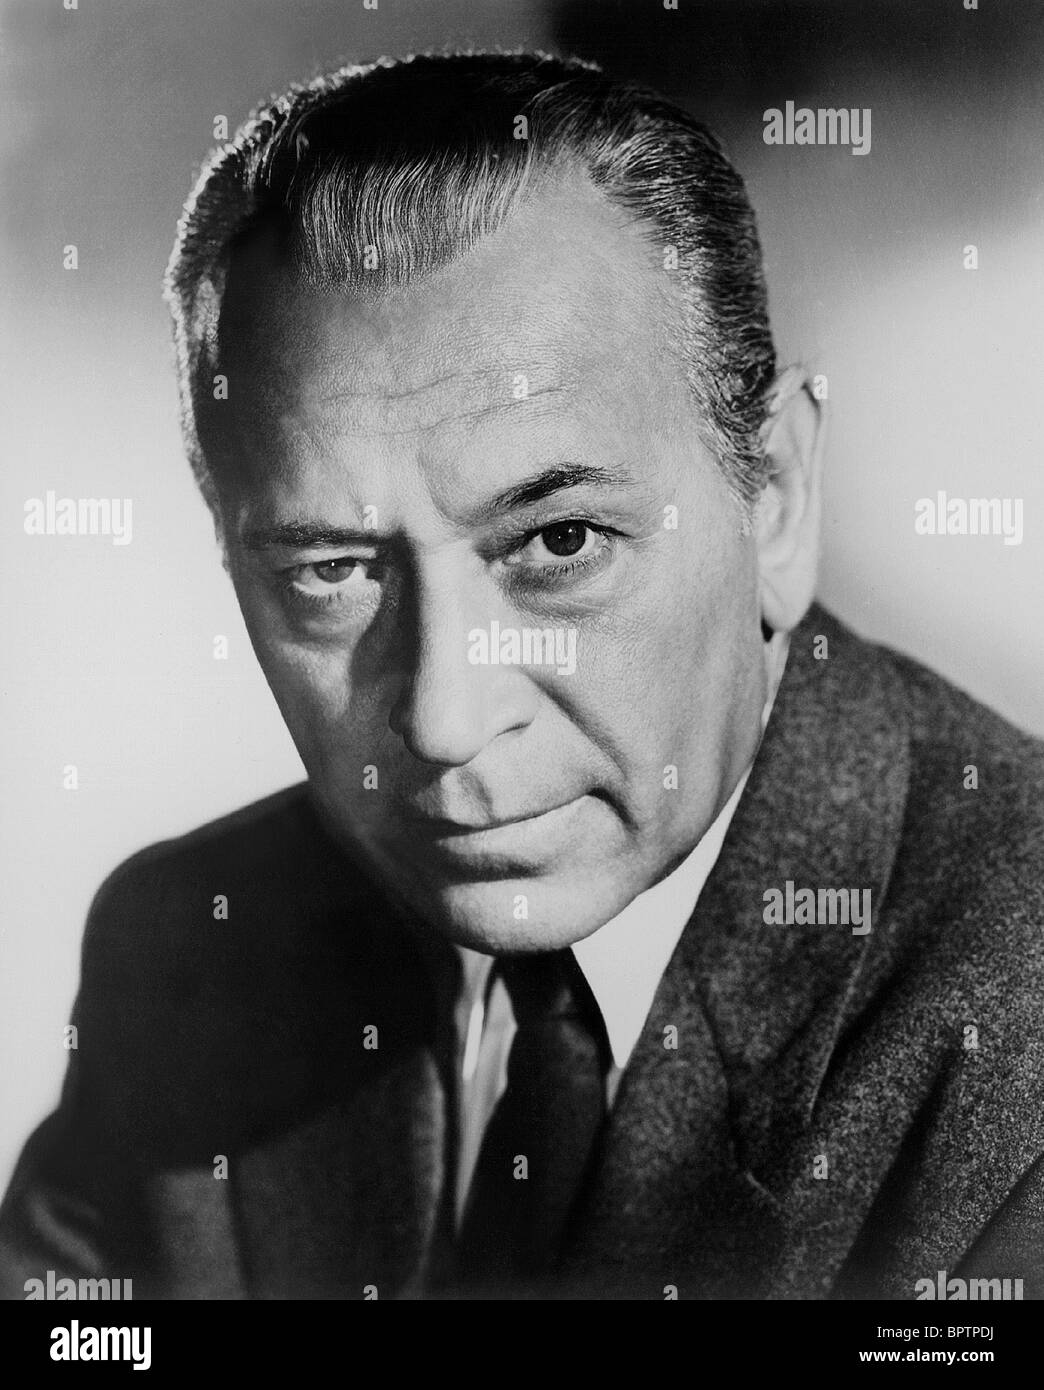 GEORGE RAFT ACTOR (1955 Stock Photo - Alamy